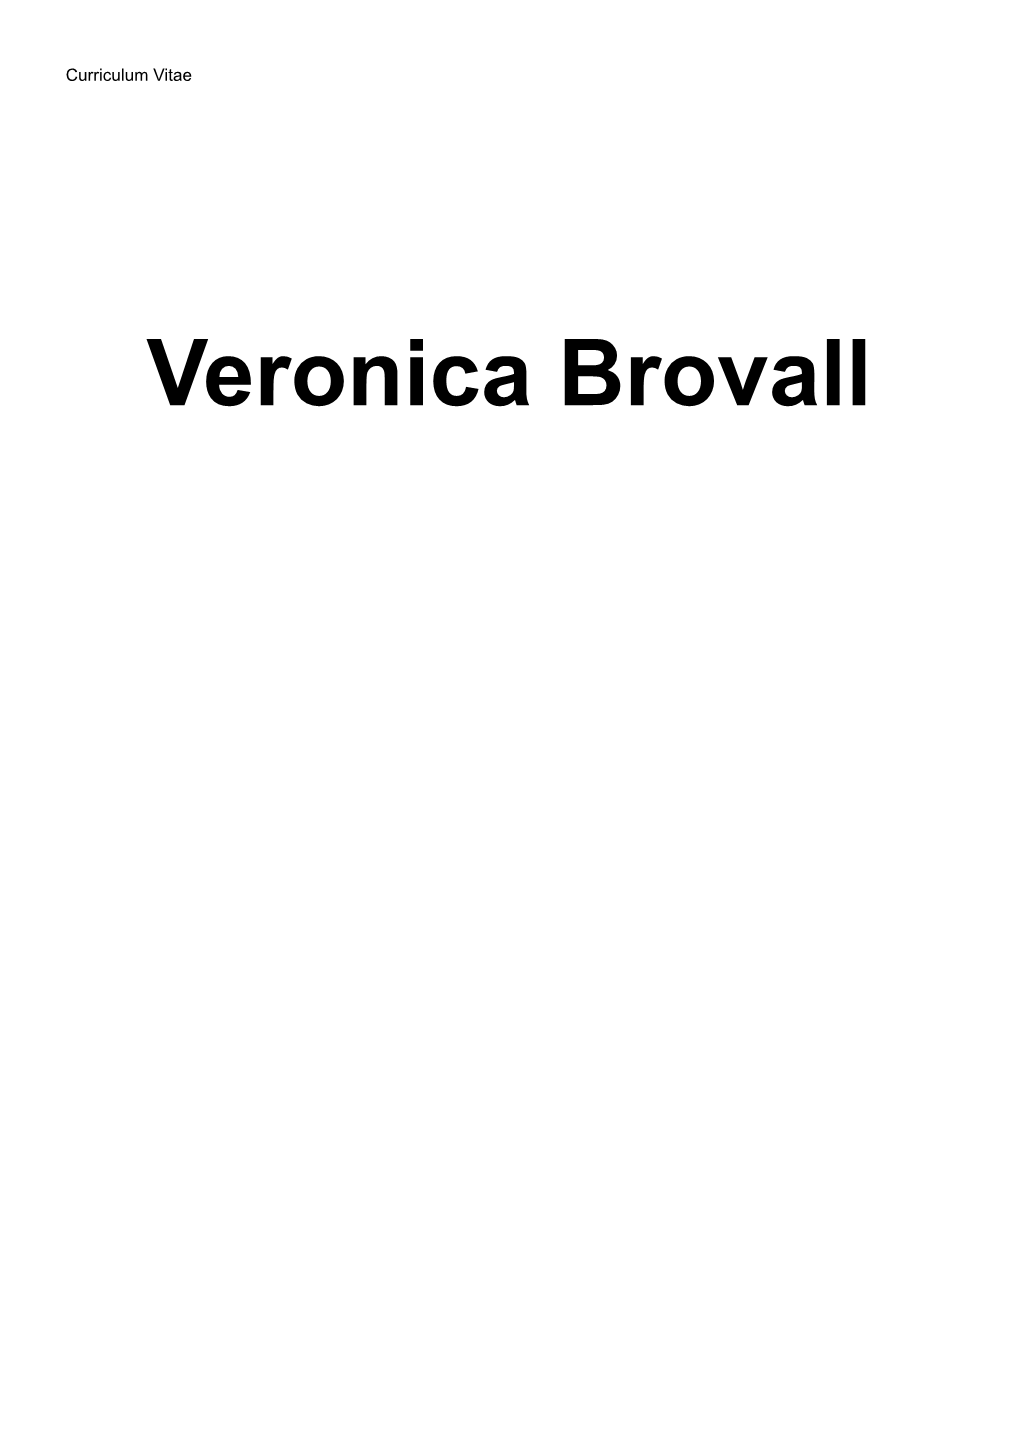 Veronica Brovall, 2020